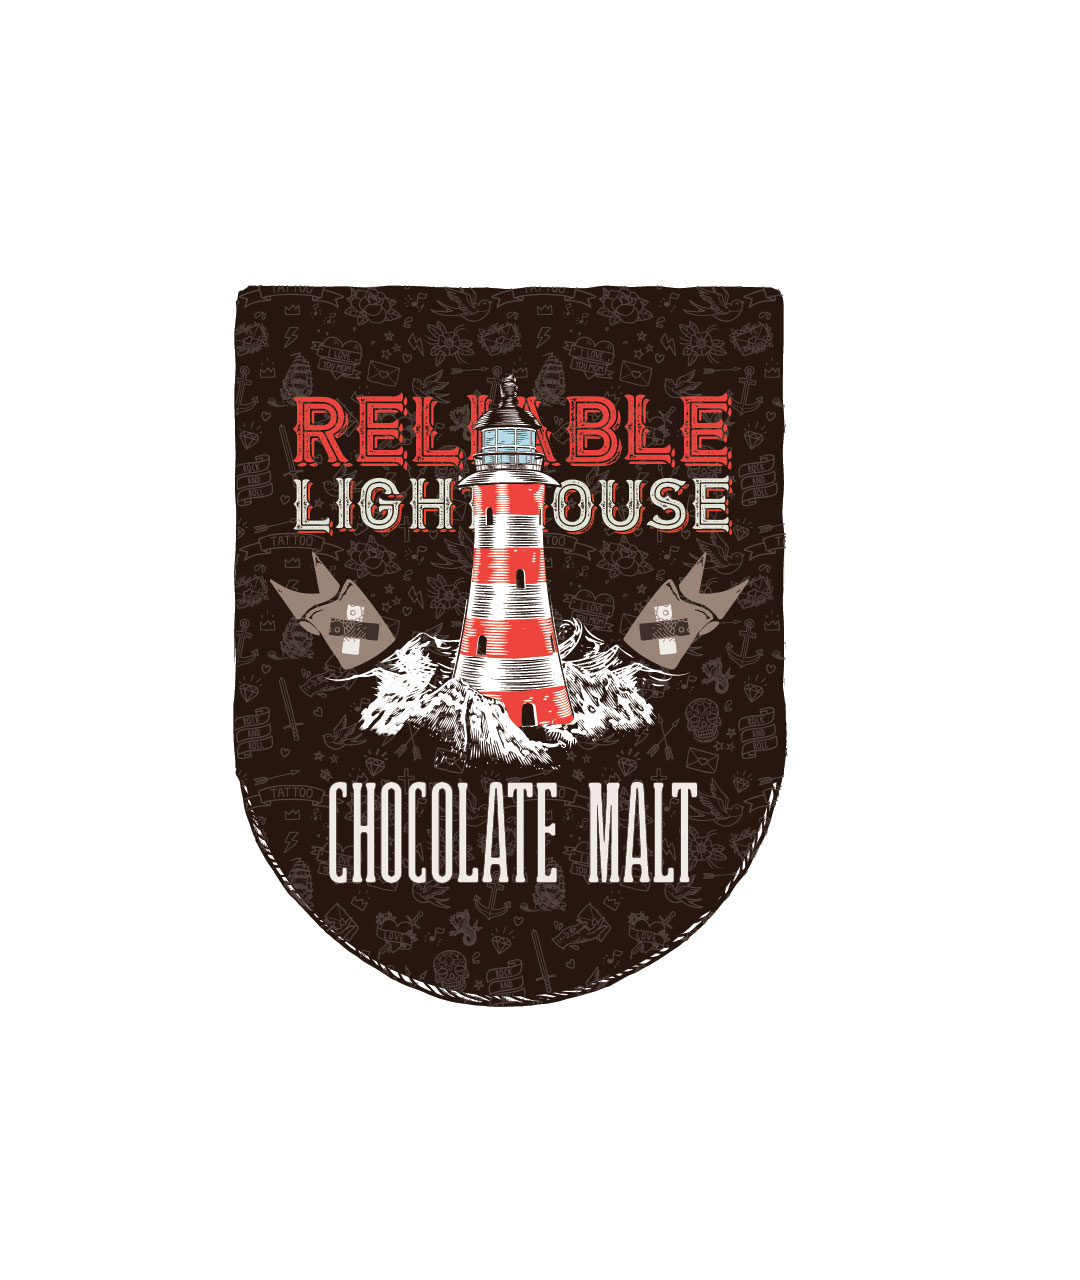 Reliable Lighthouse – Chocolate Malt